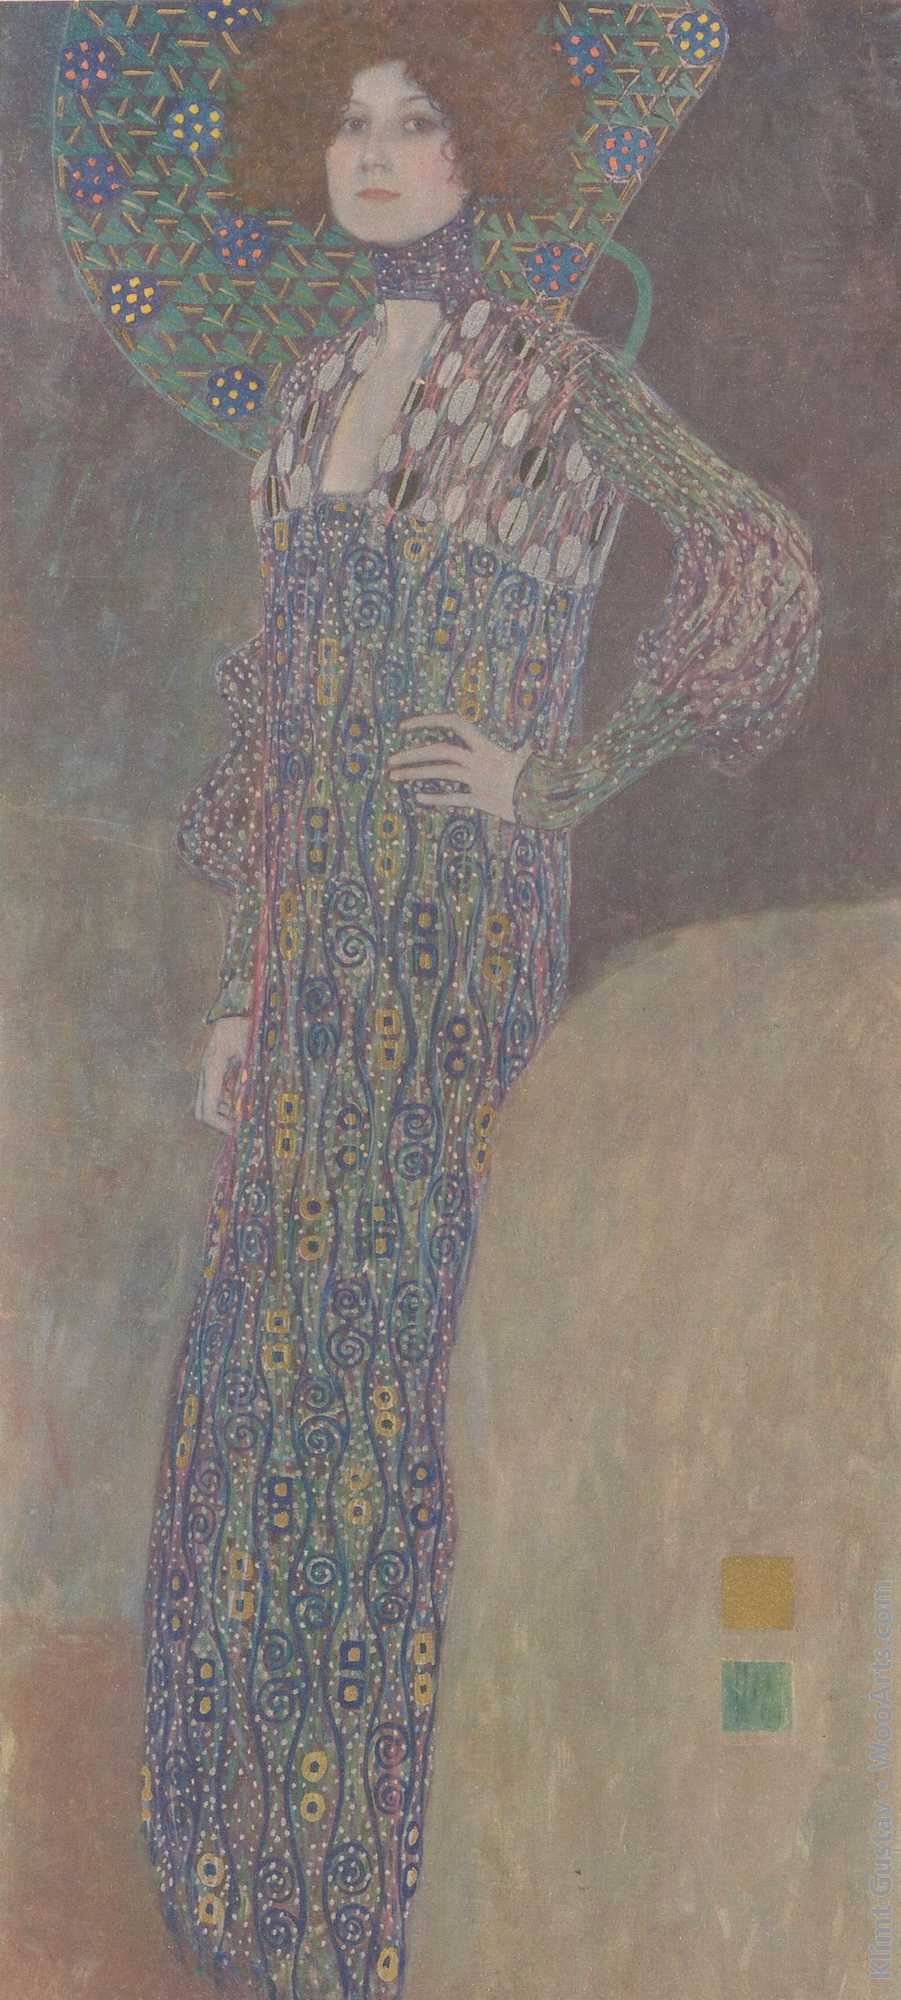 Female portrait after Gustav Klimt, plate 10, The work of Gustav Klimt Gustav Klimt 1918